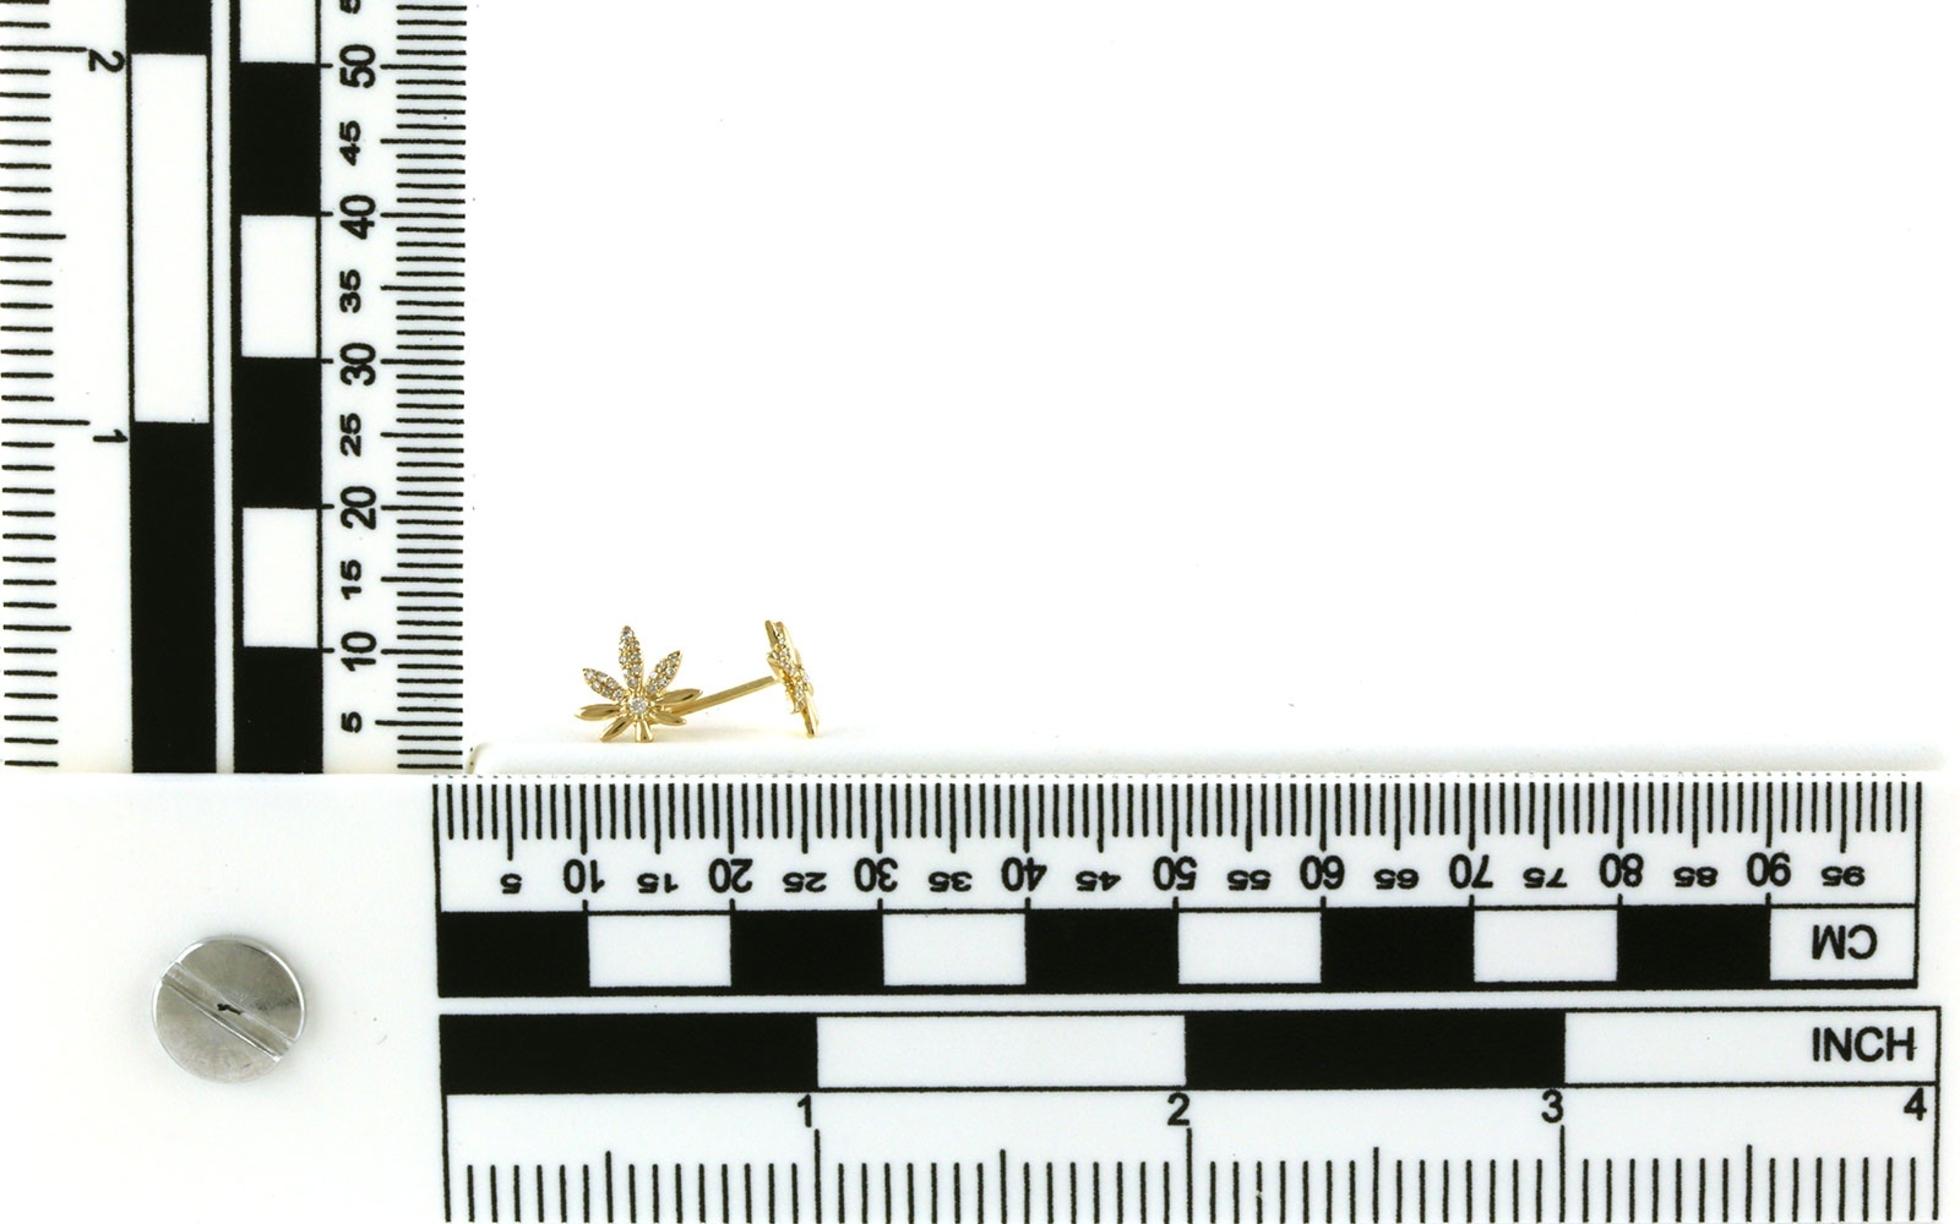 Marijuana Leaf Diamond Studs in Yellow Gold (0.10cts TWT) scale